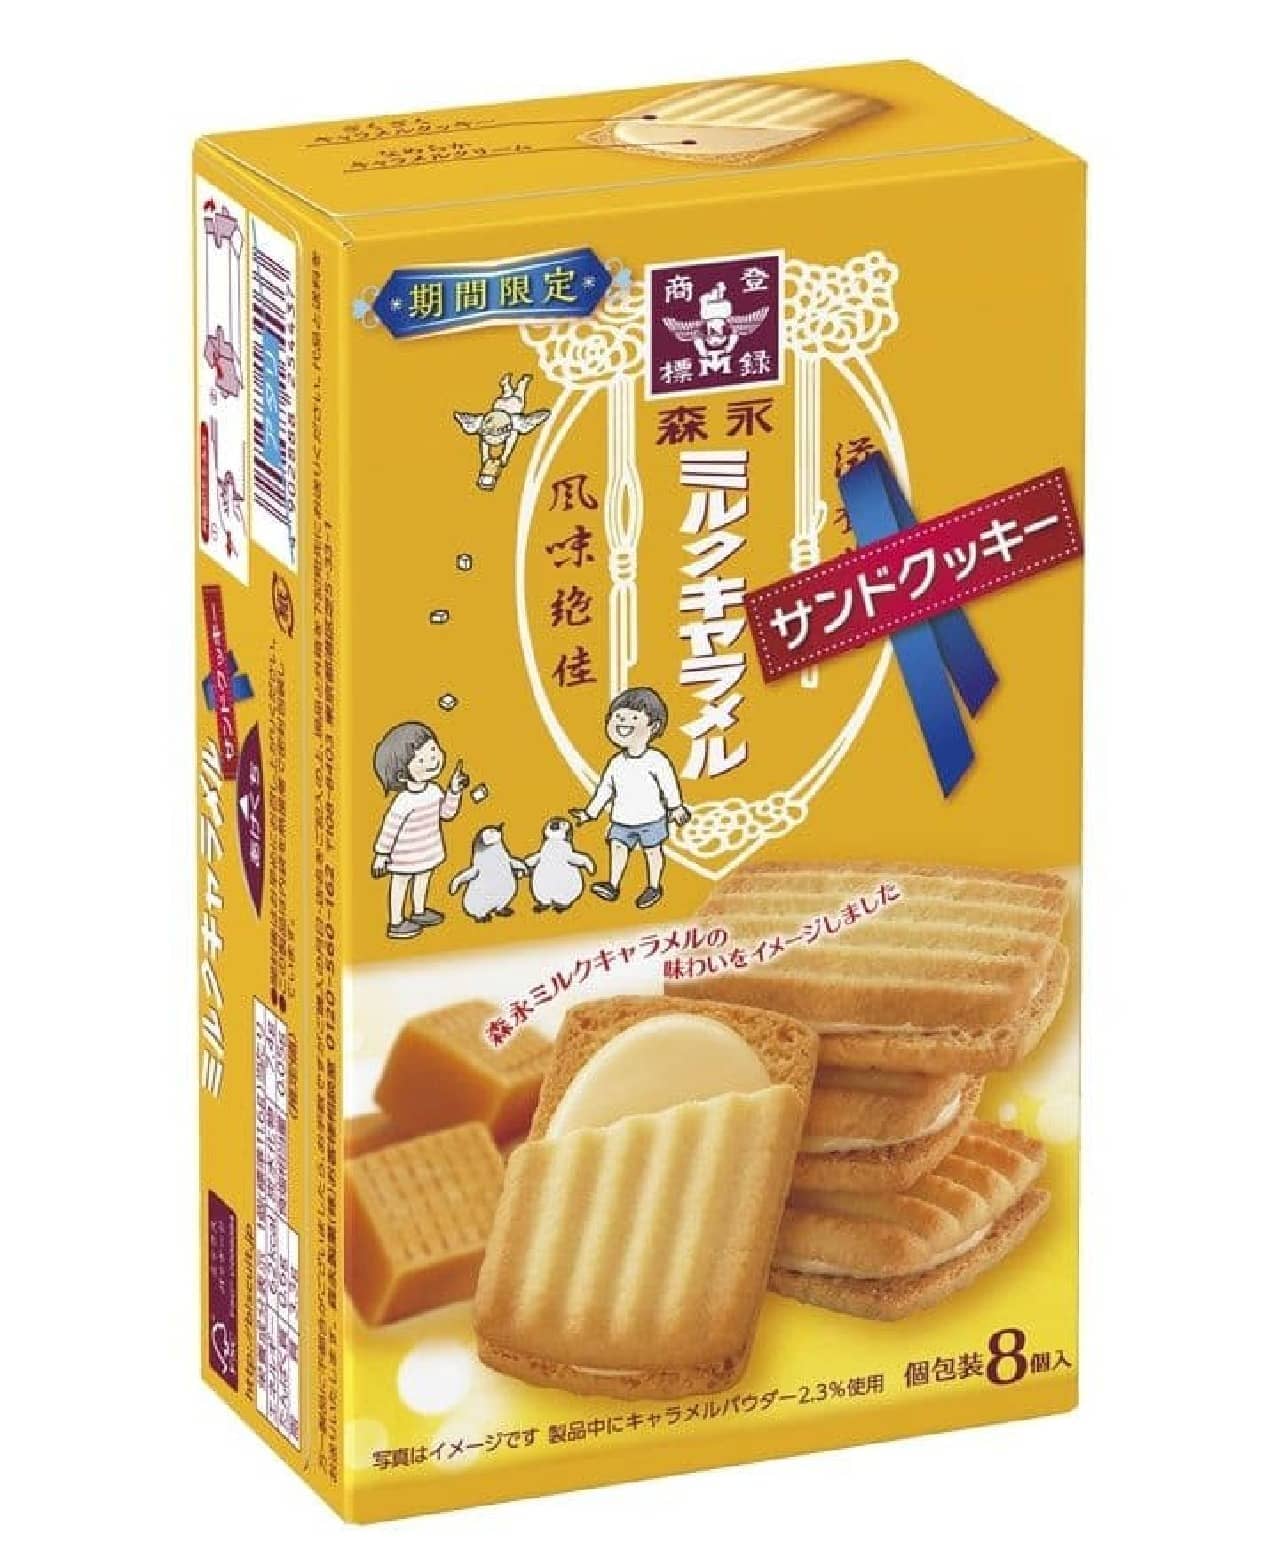 Morinaga "Milk Caramel Cream Sandwich Cookies".